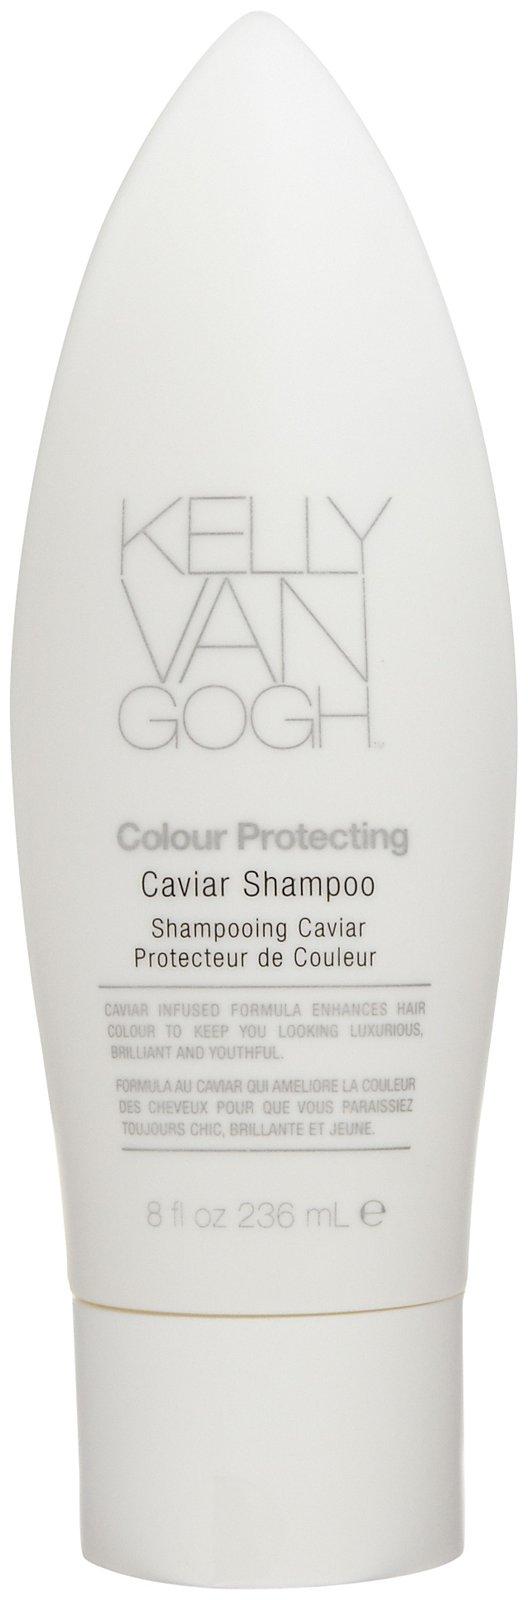 Kelly Van Gogh Colour Protecting Caviar Shampoo